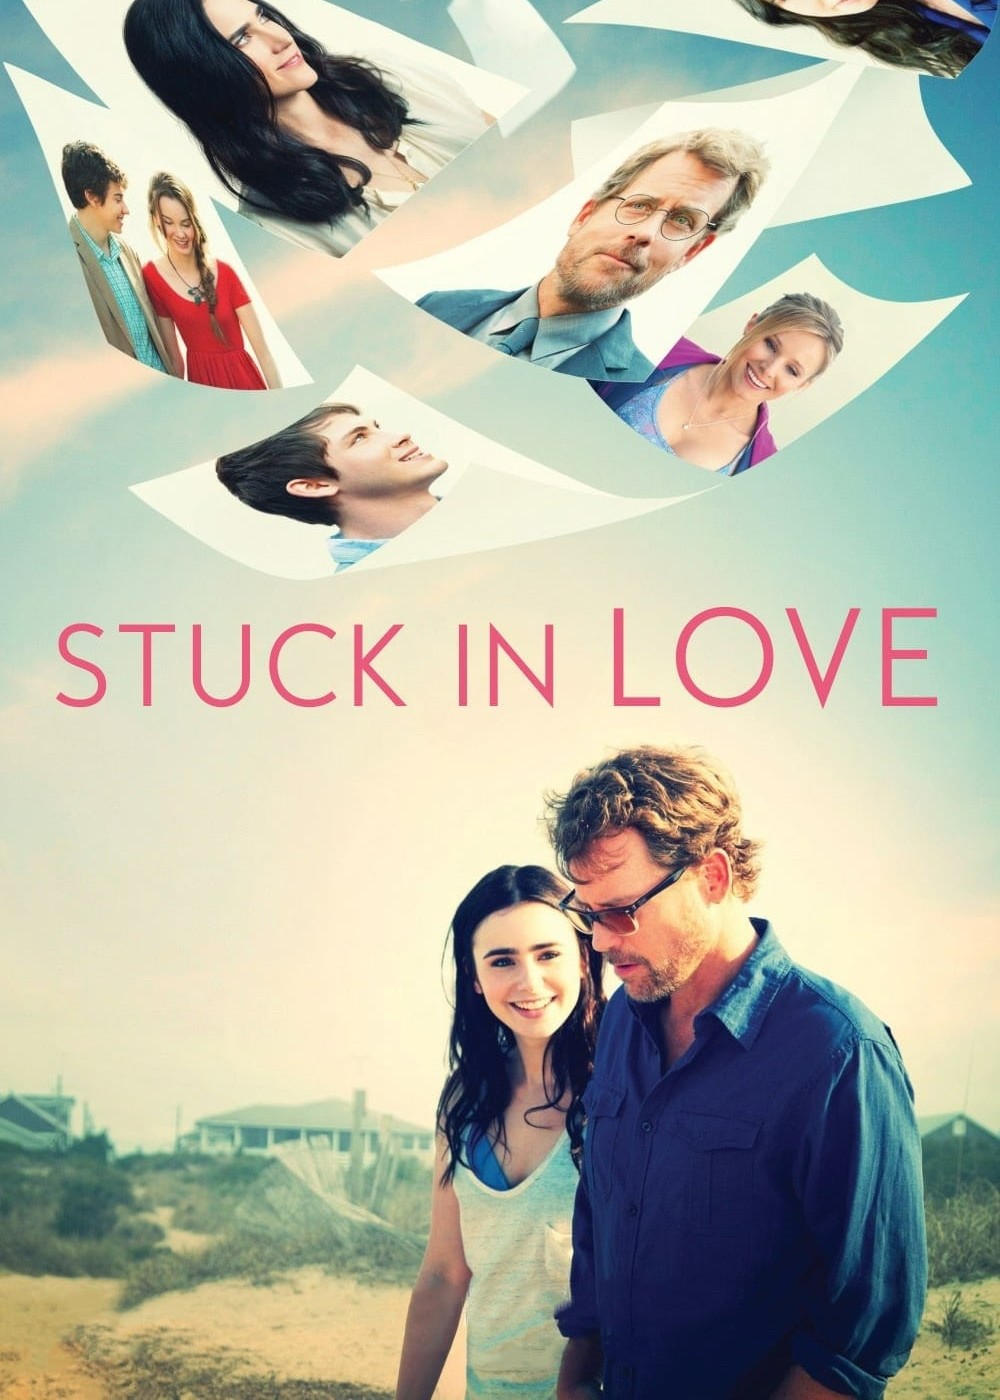 Stuck in Love. 2012